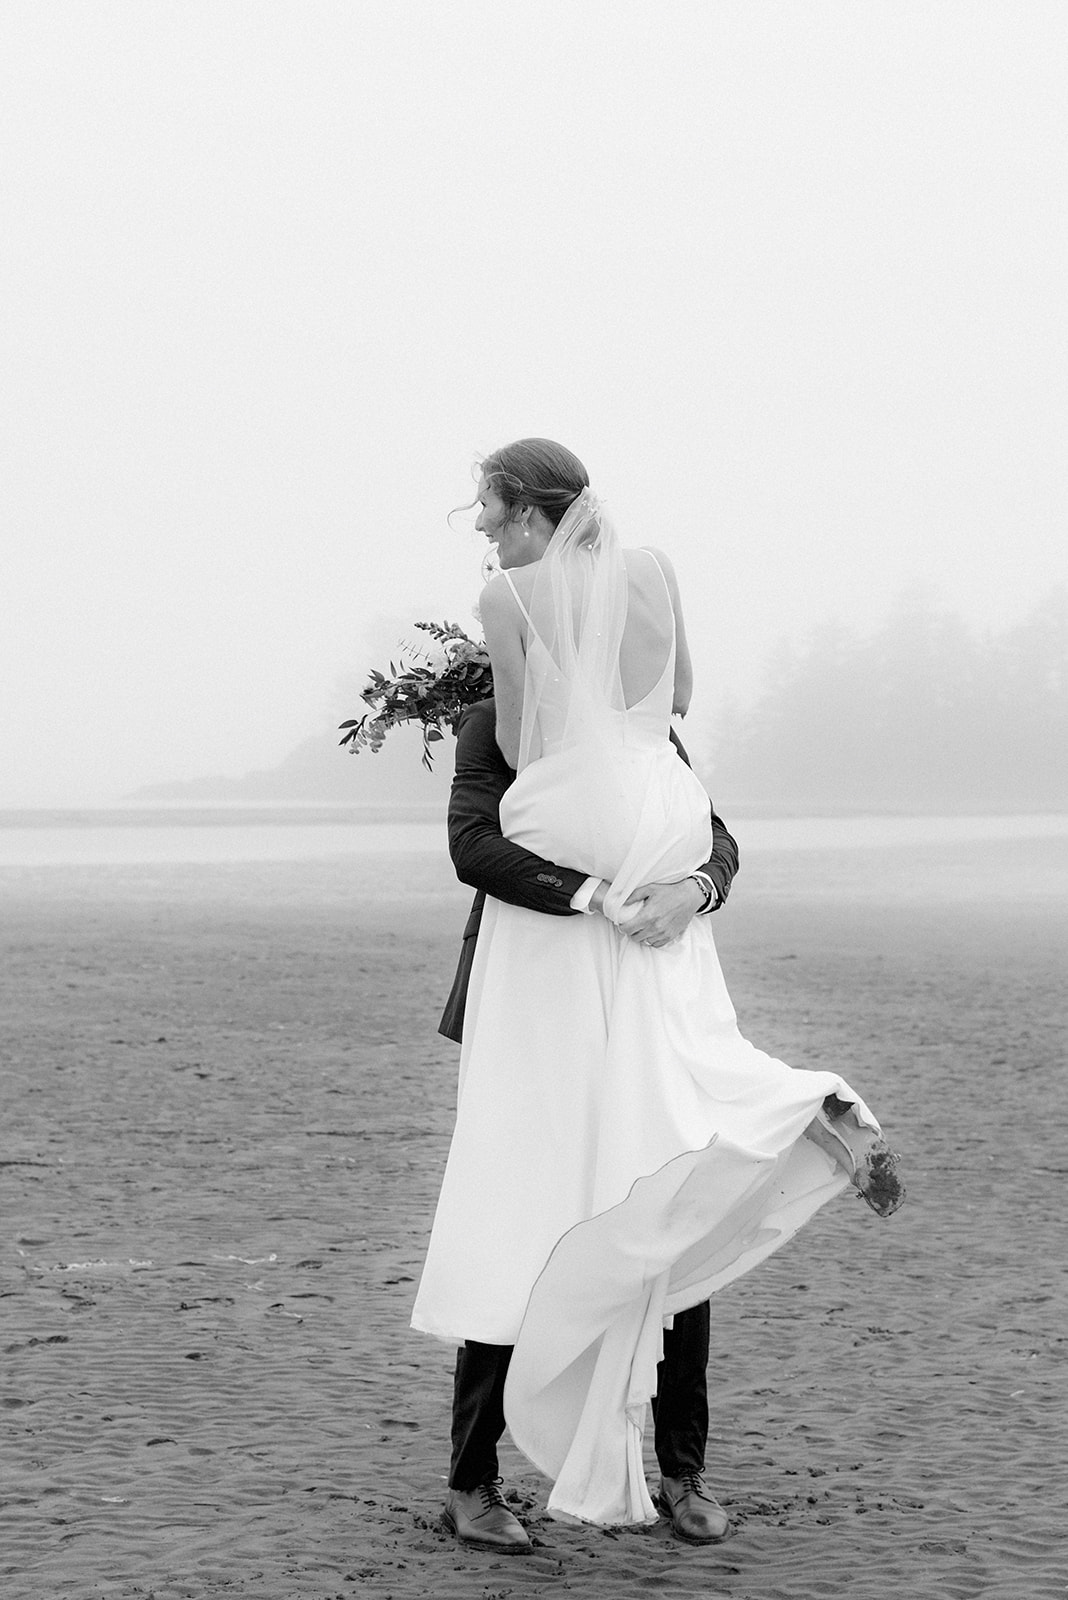 Vancouver wedding photographer captures photos of couple's wedding in Tofino, BC